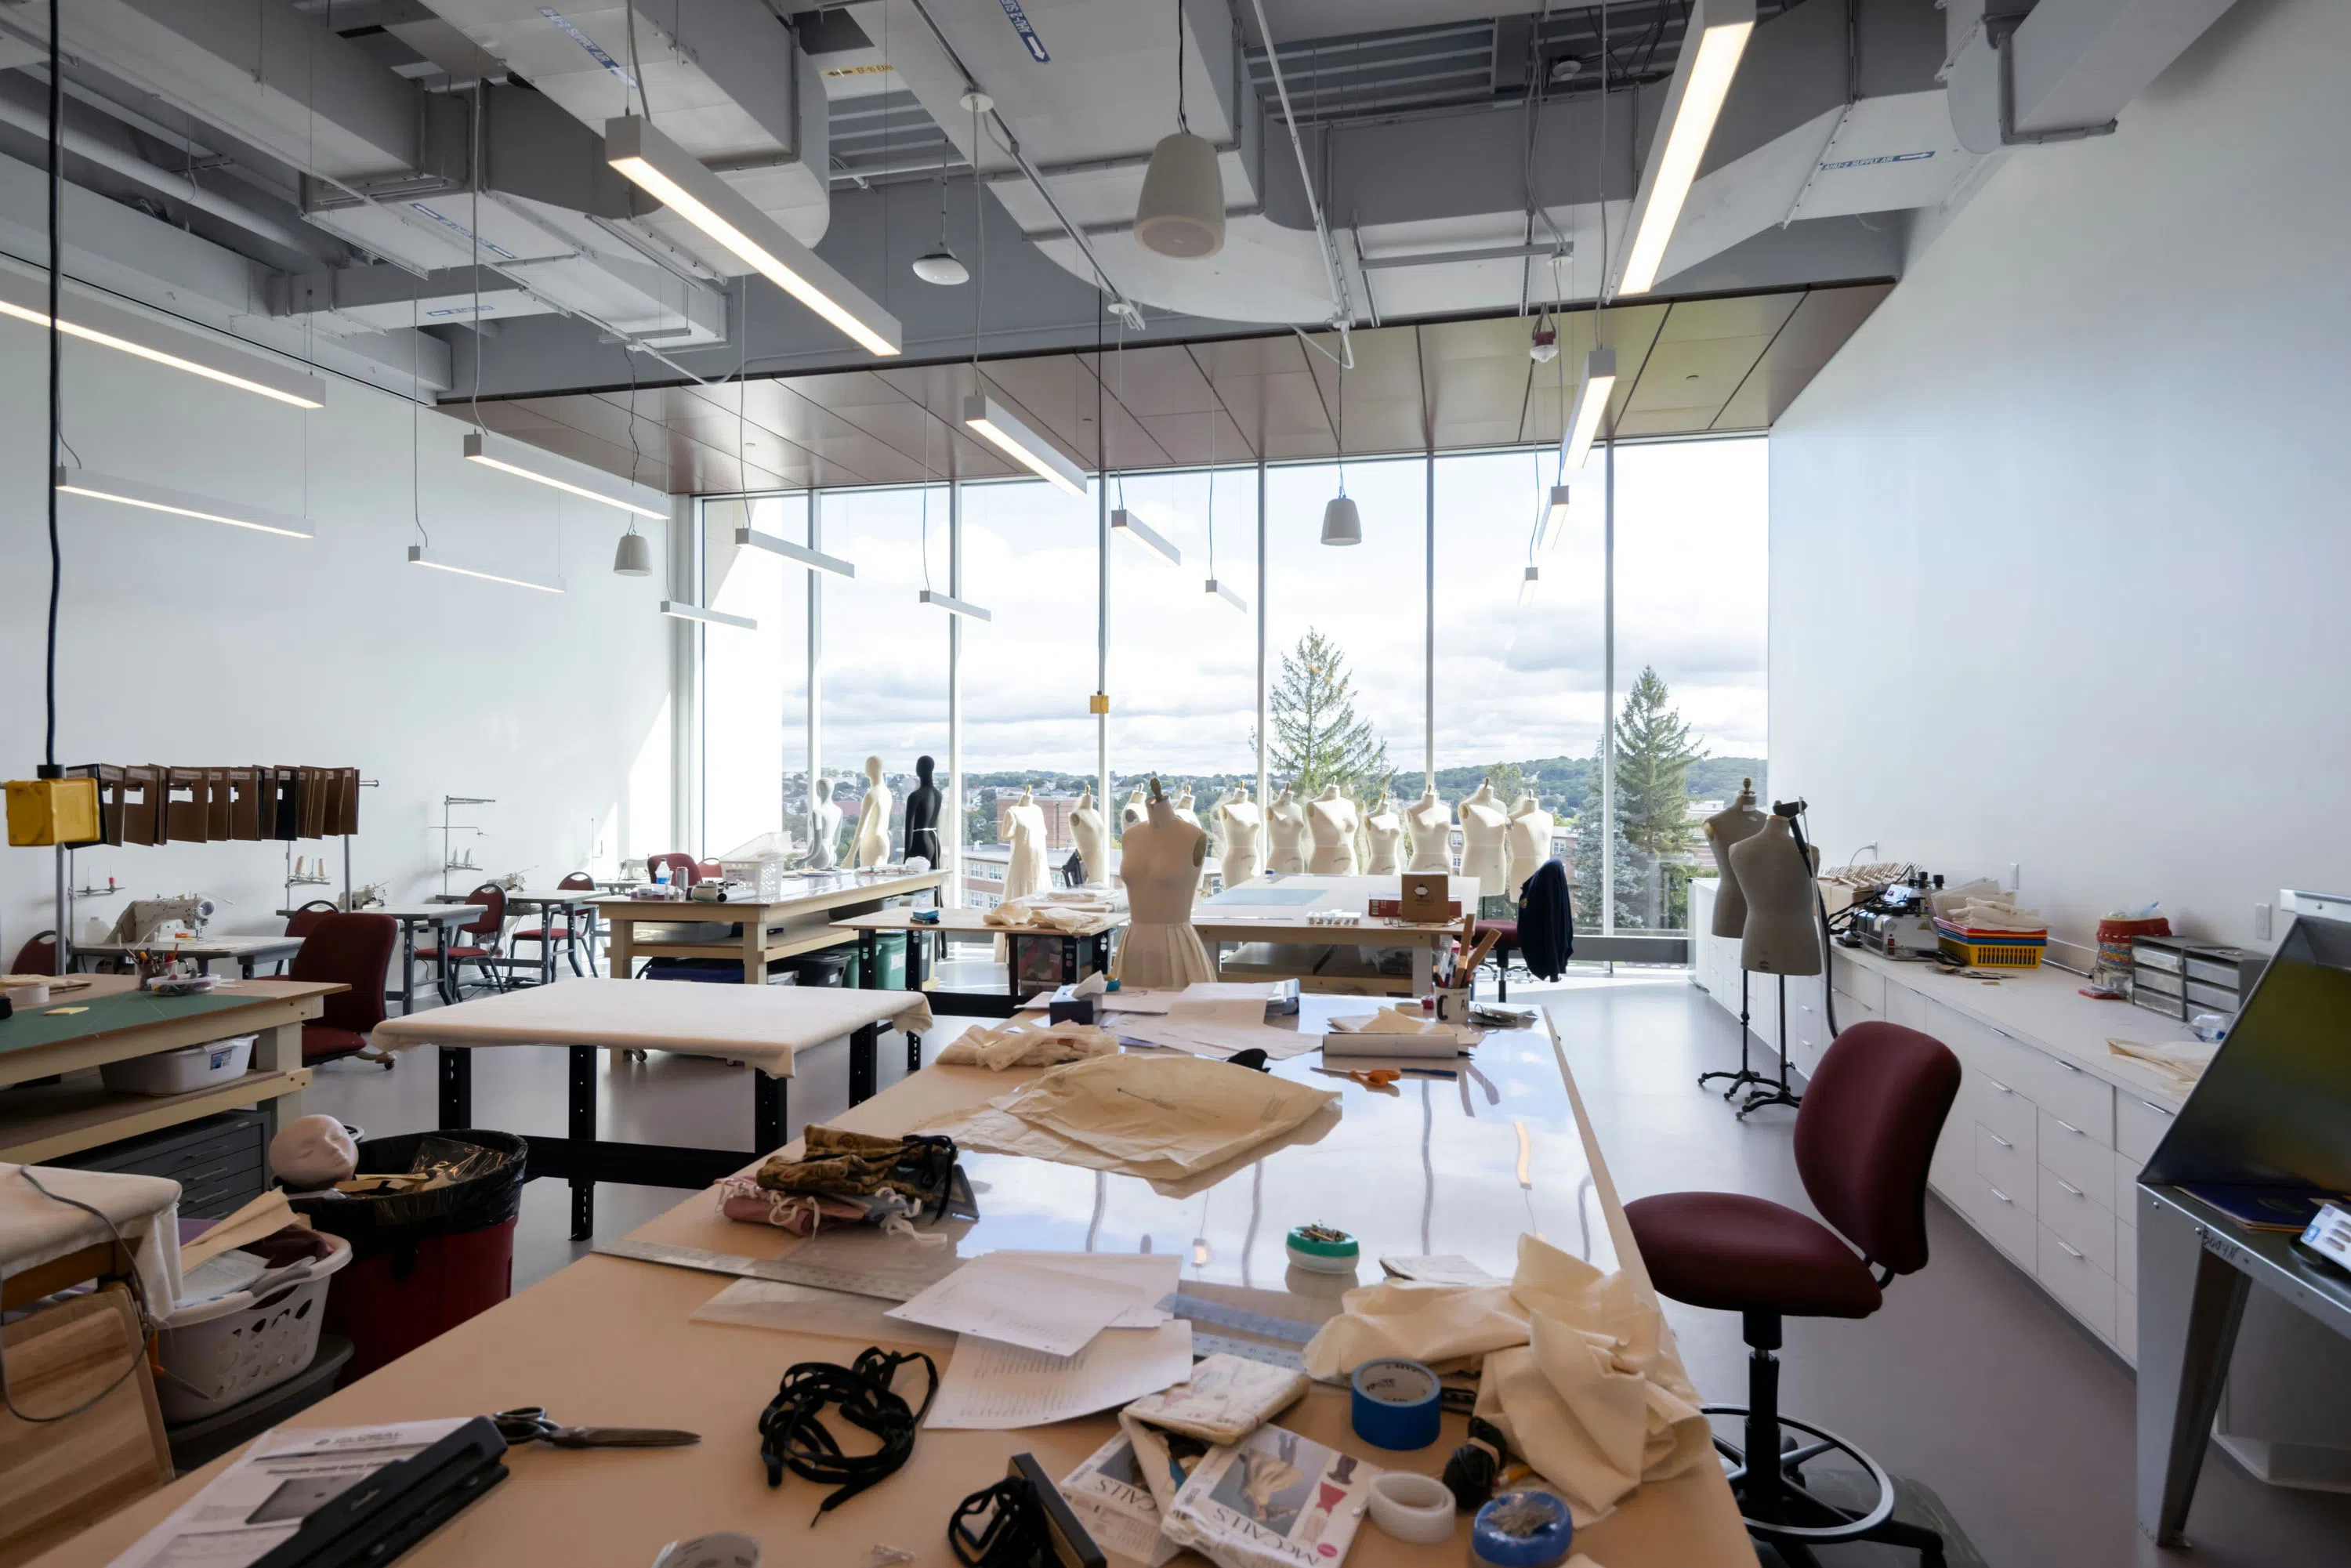 Desks and mannequins in the design studio in Prior 